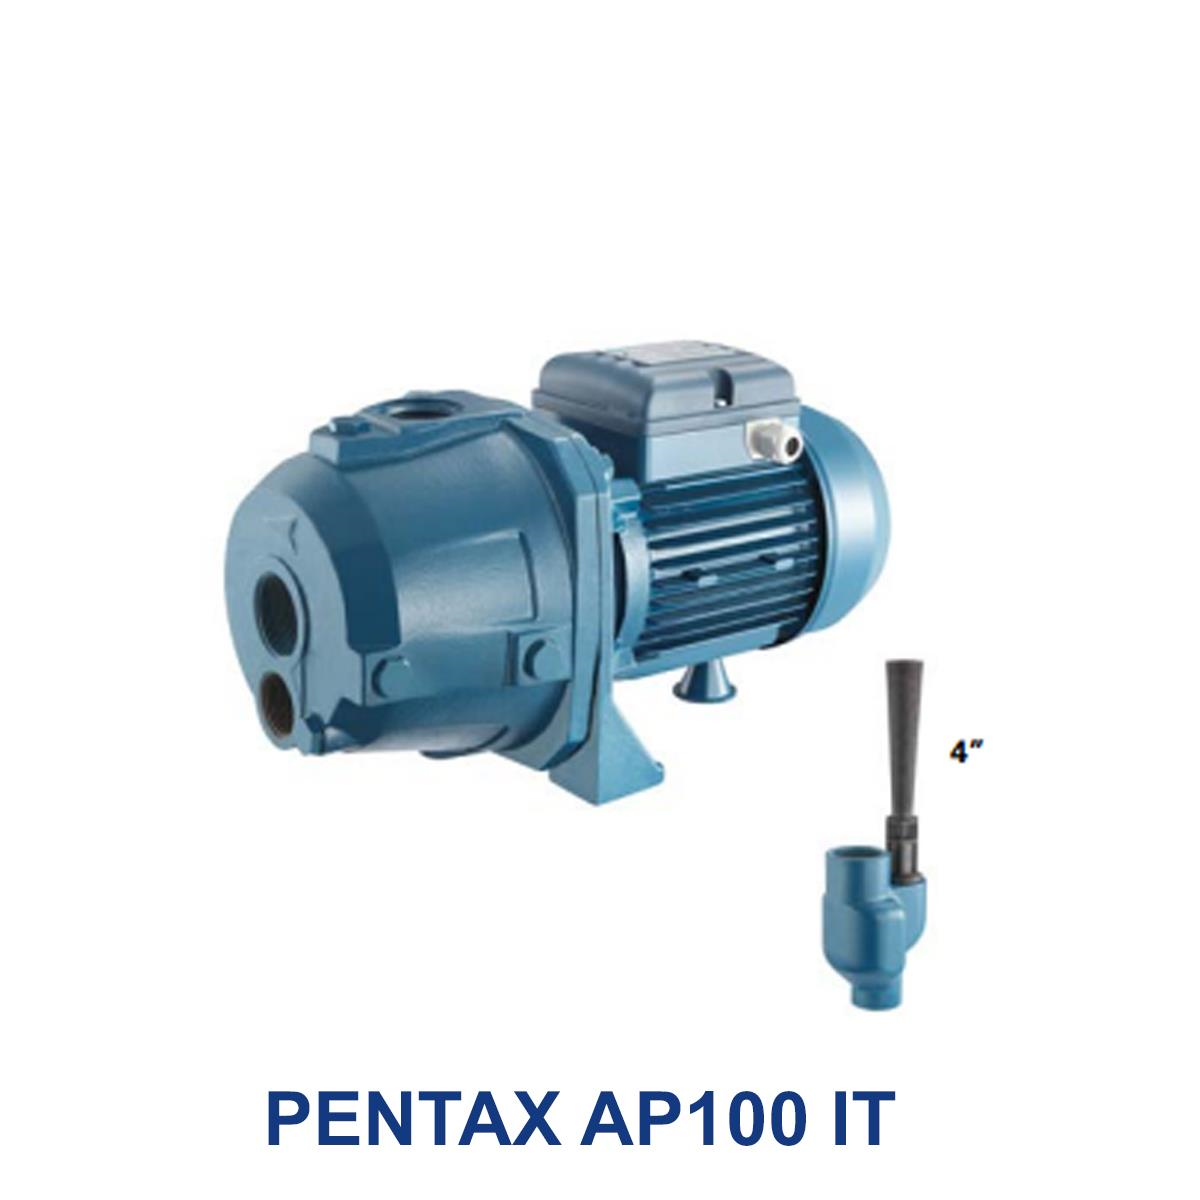 PENTAX-AP100-IT